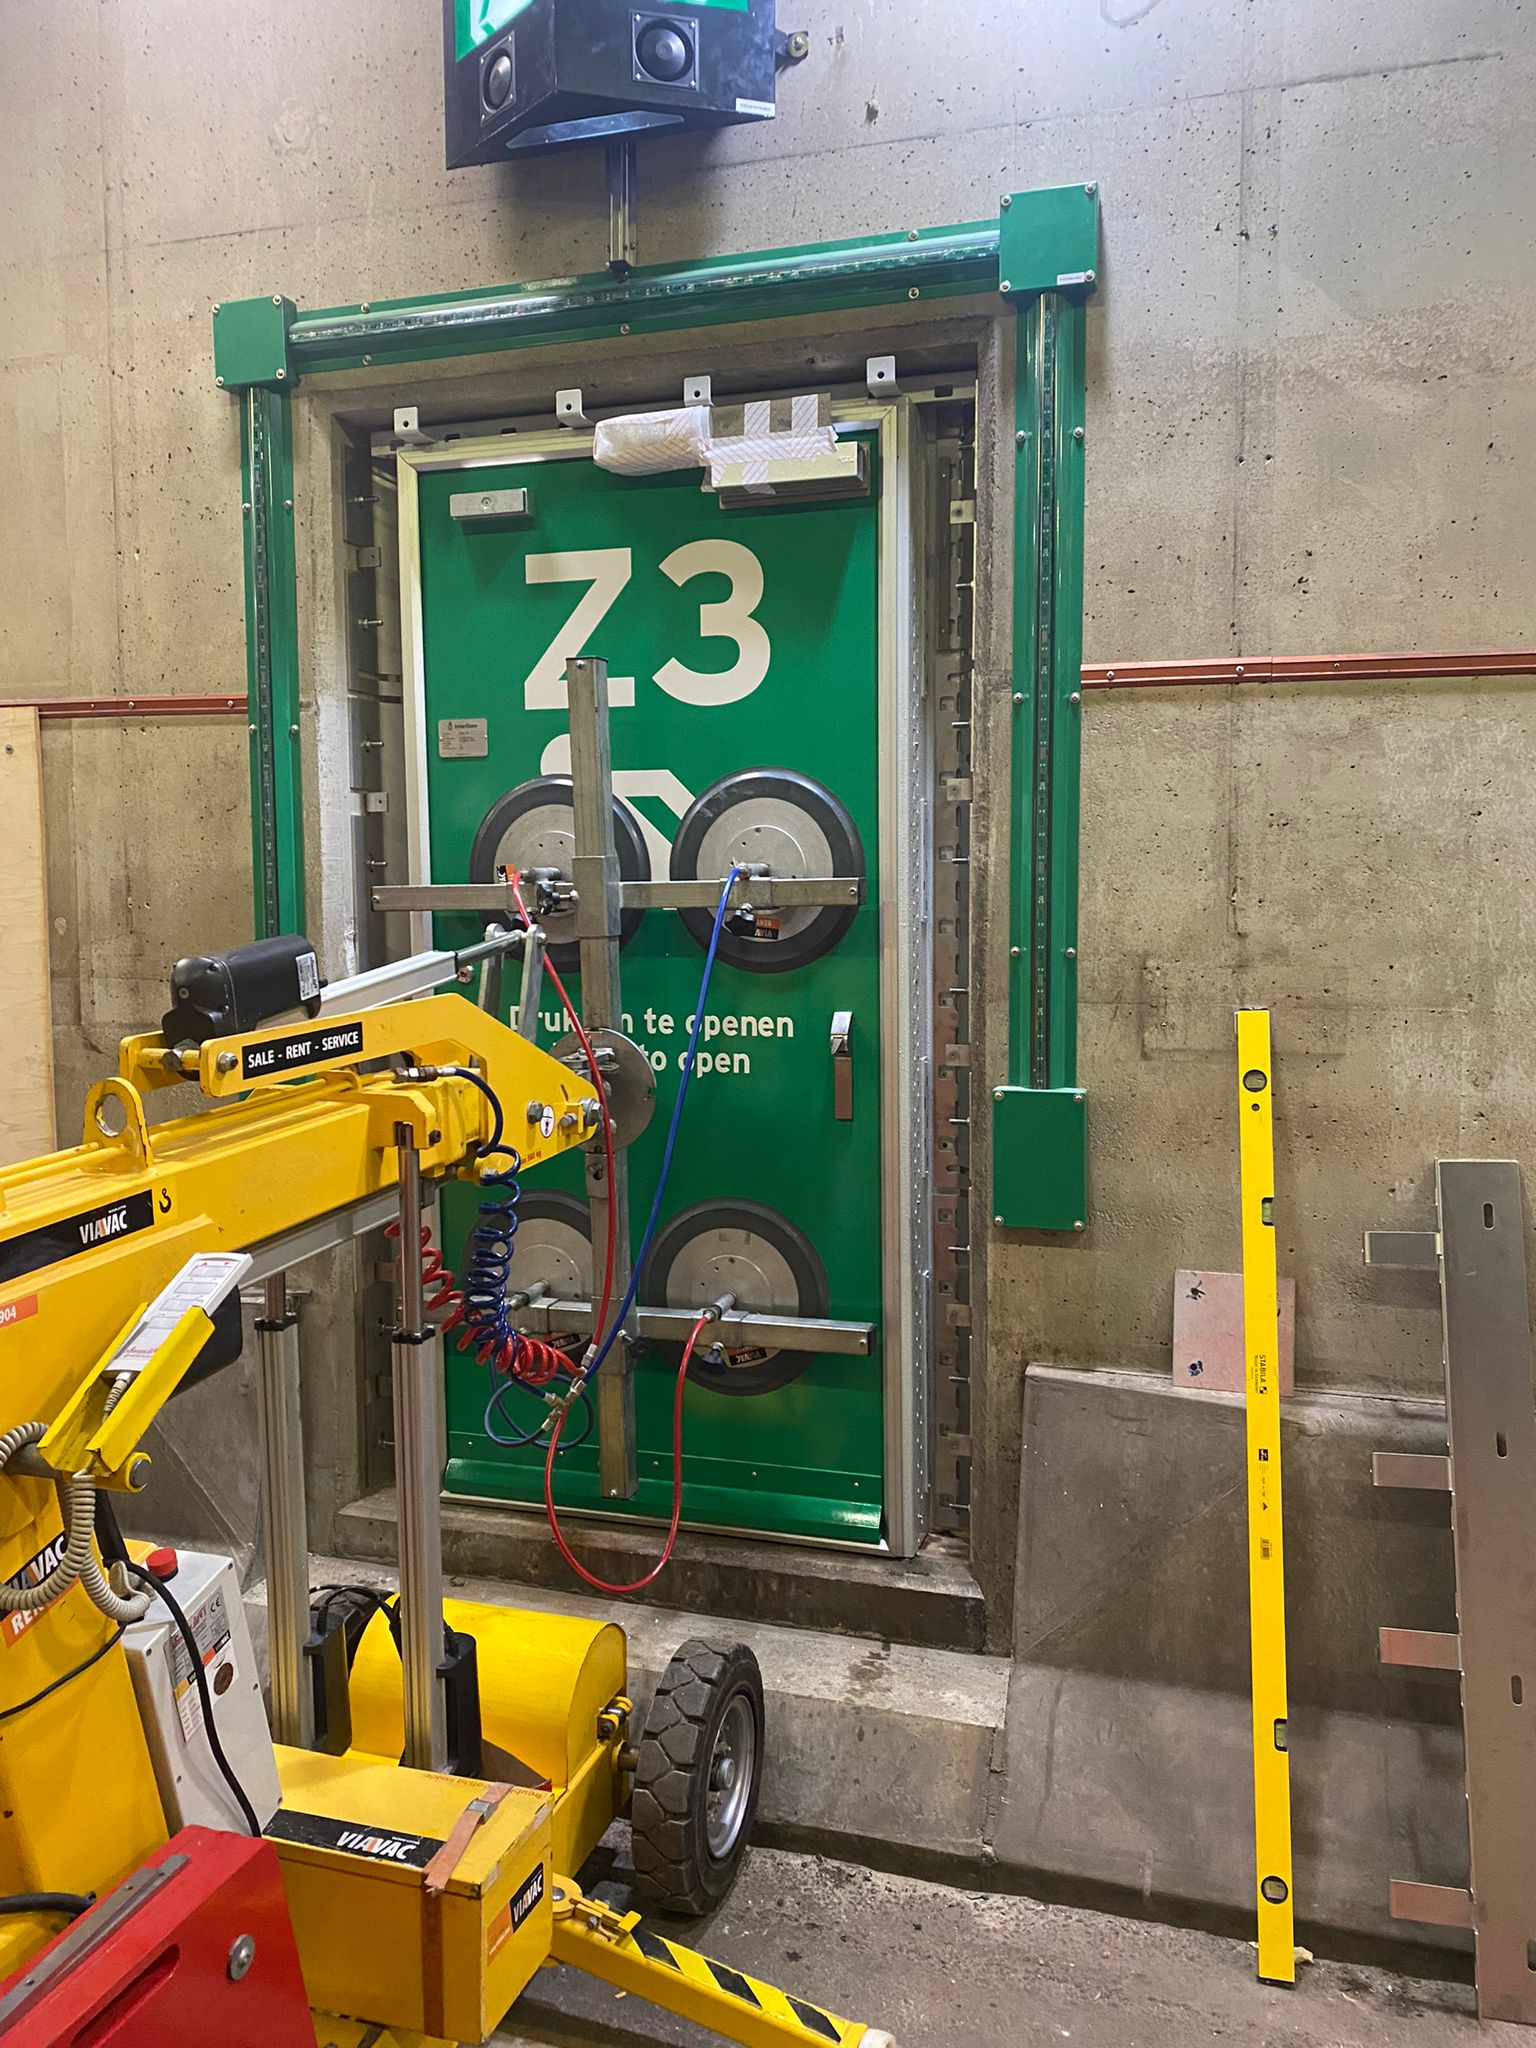 InterDam installs the first RWS approved tunnel door